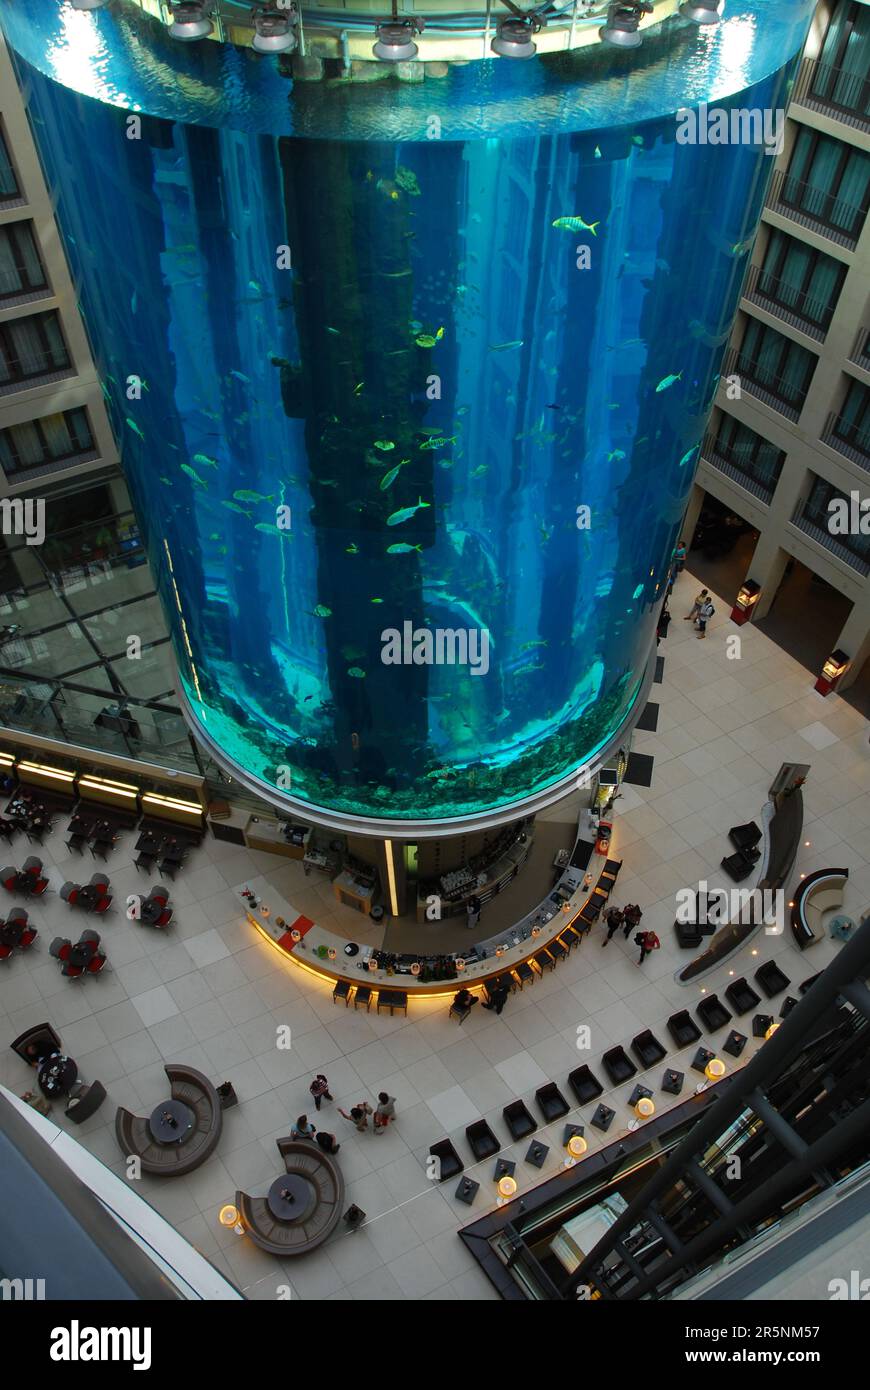 Aquarium in hotel lobby, Hotel Radisson, Berlin, Lobby with AquaDom, Atrium, Germany Stock Photo